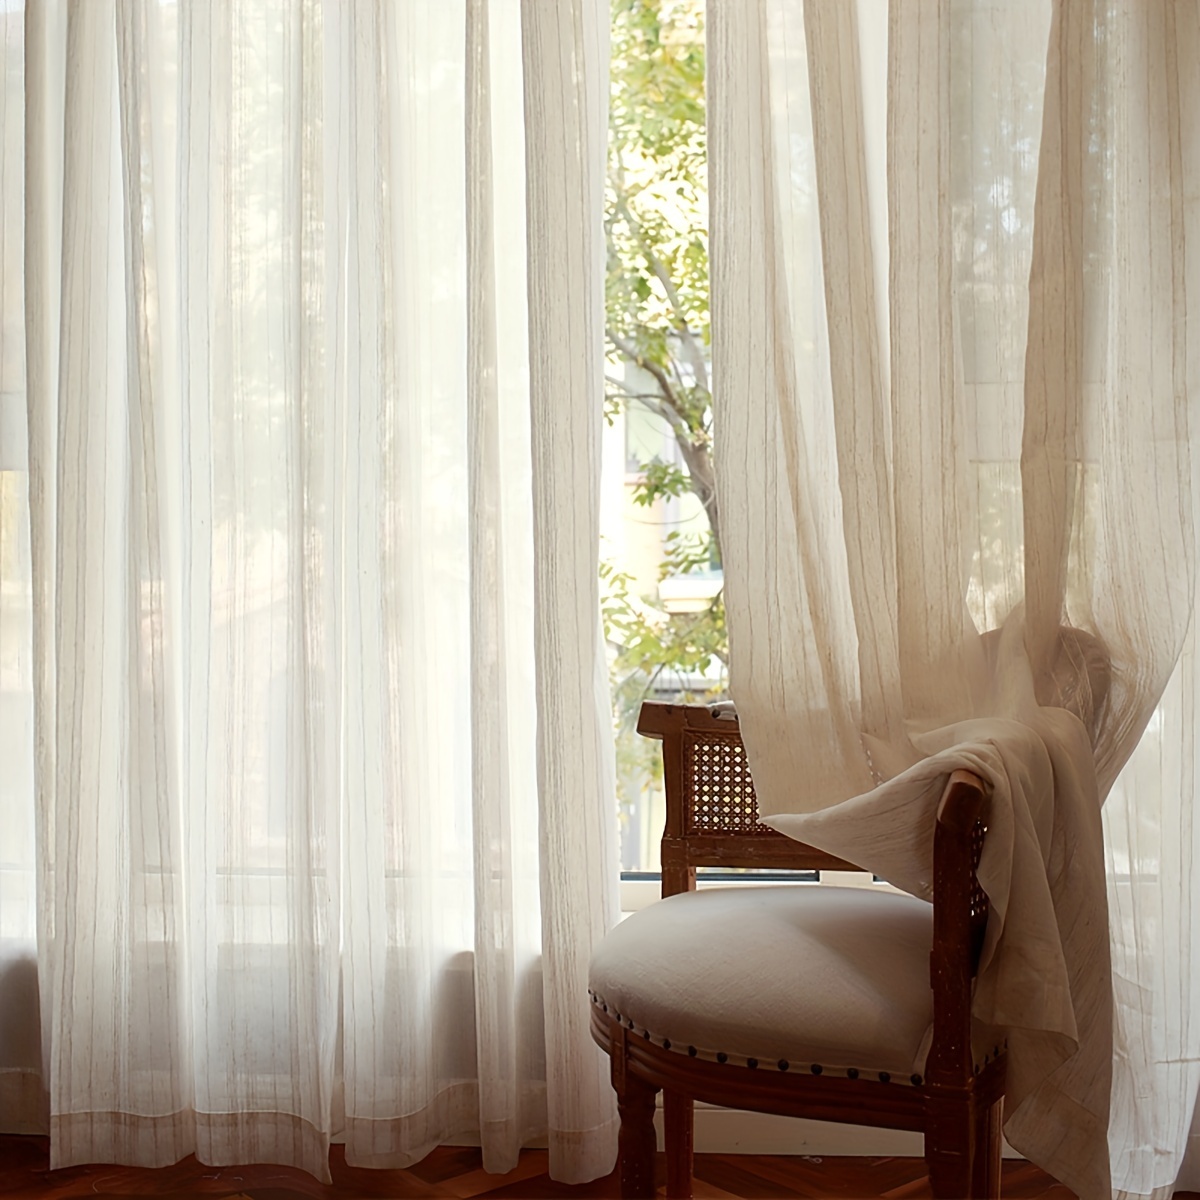 Cortinas transparentes, simple y moderna, cortinas semitransparentes, color  sólido/cortinas blancas transparentes, cortina de dormitorio, sala de